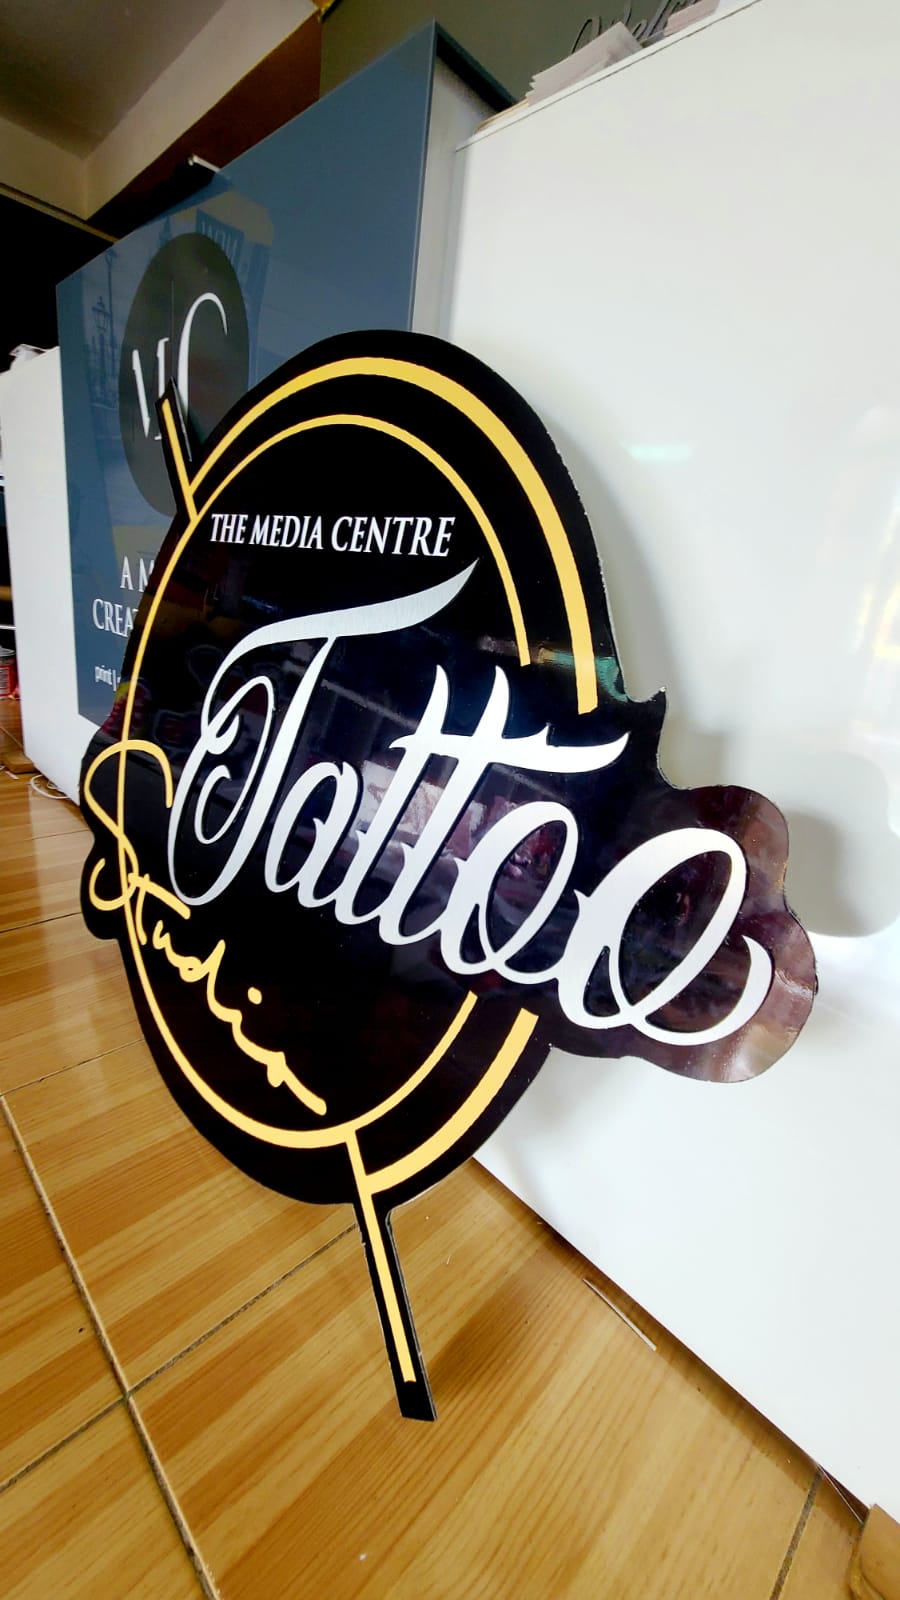 The media centre tattoos